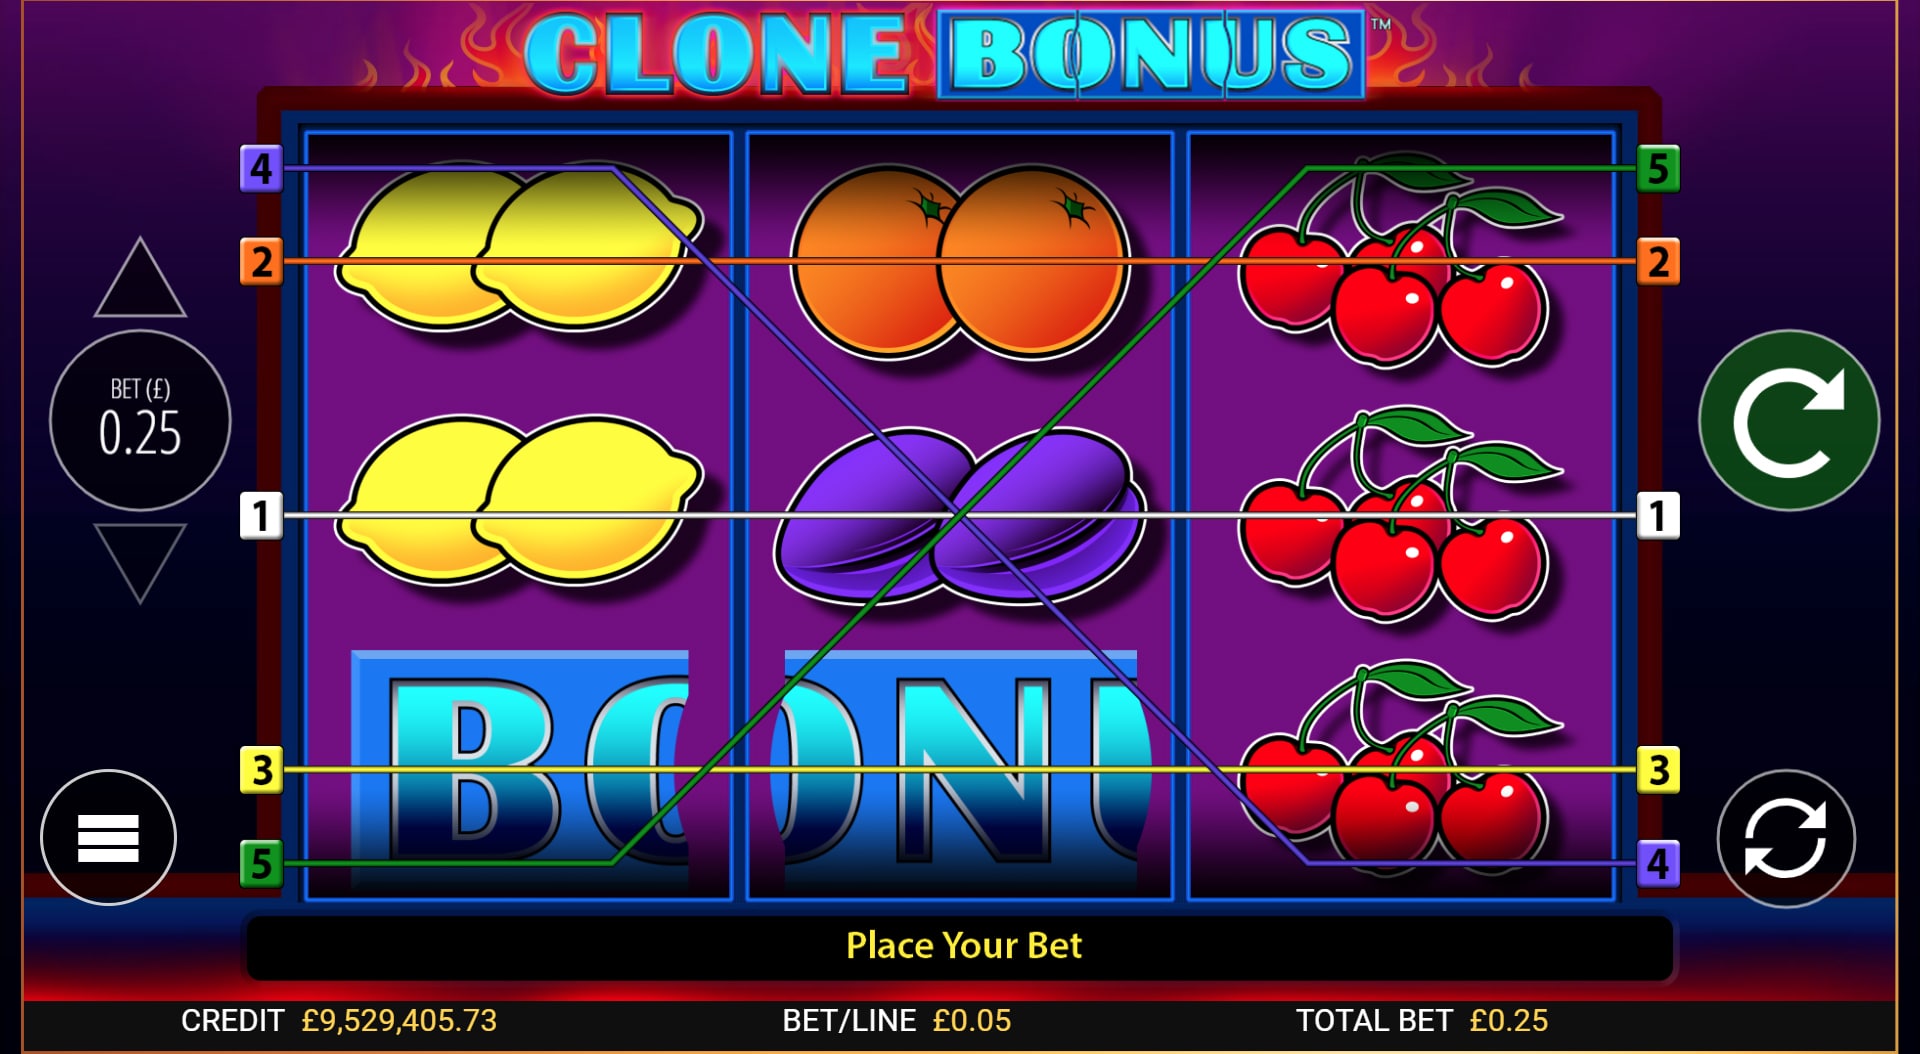 Clone Bonus Free Spins